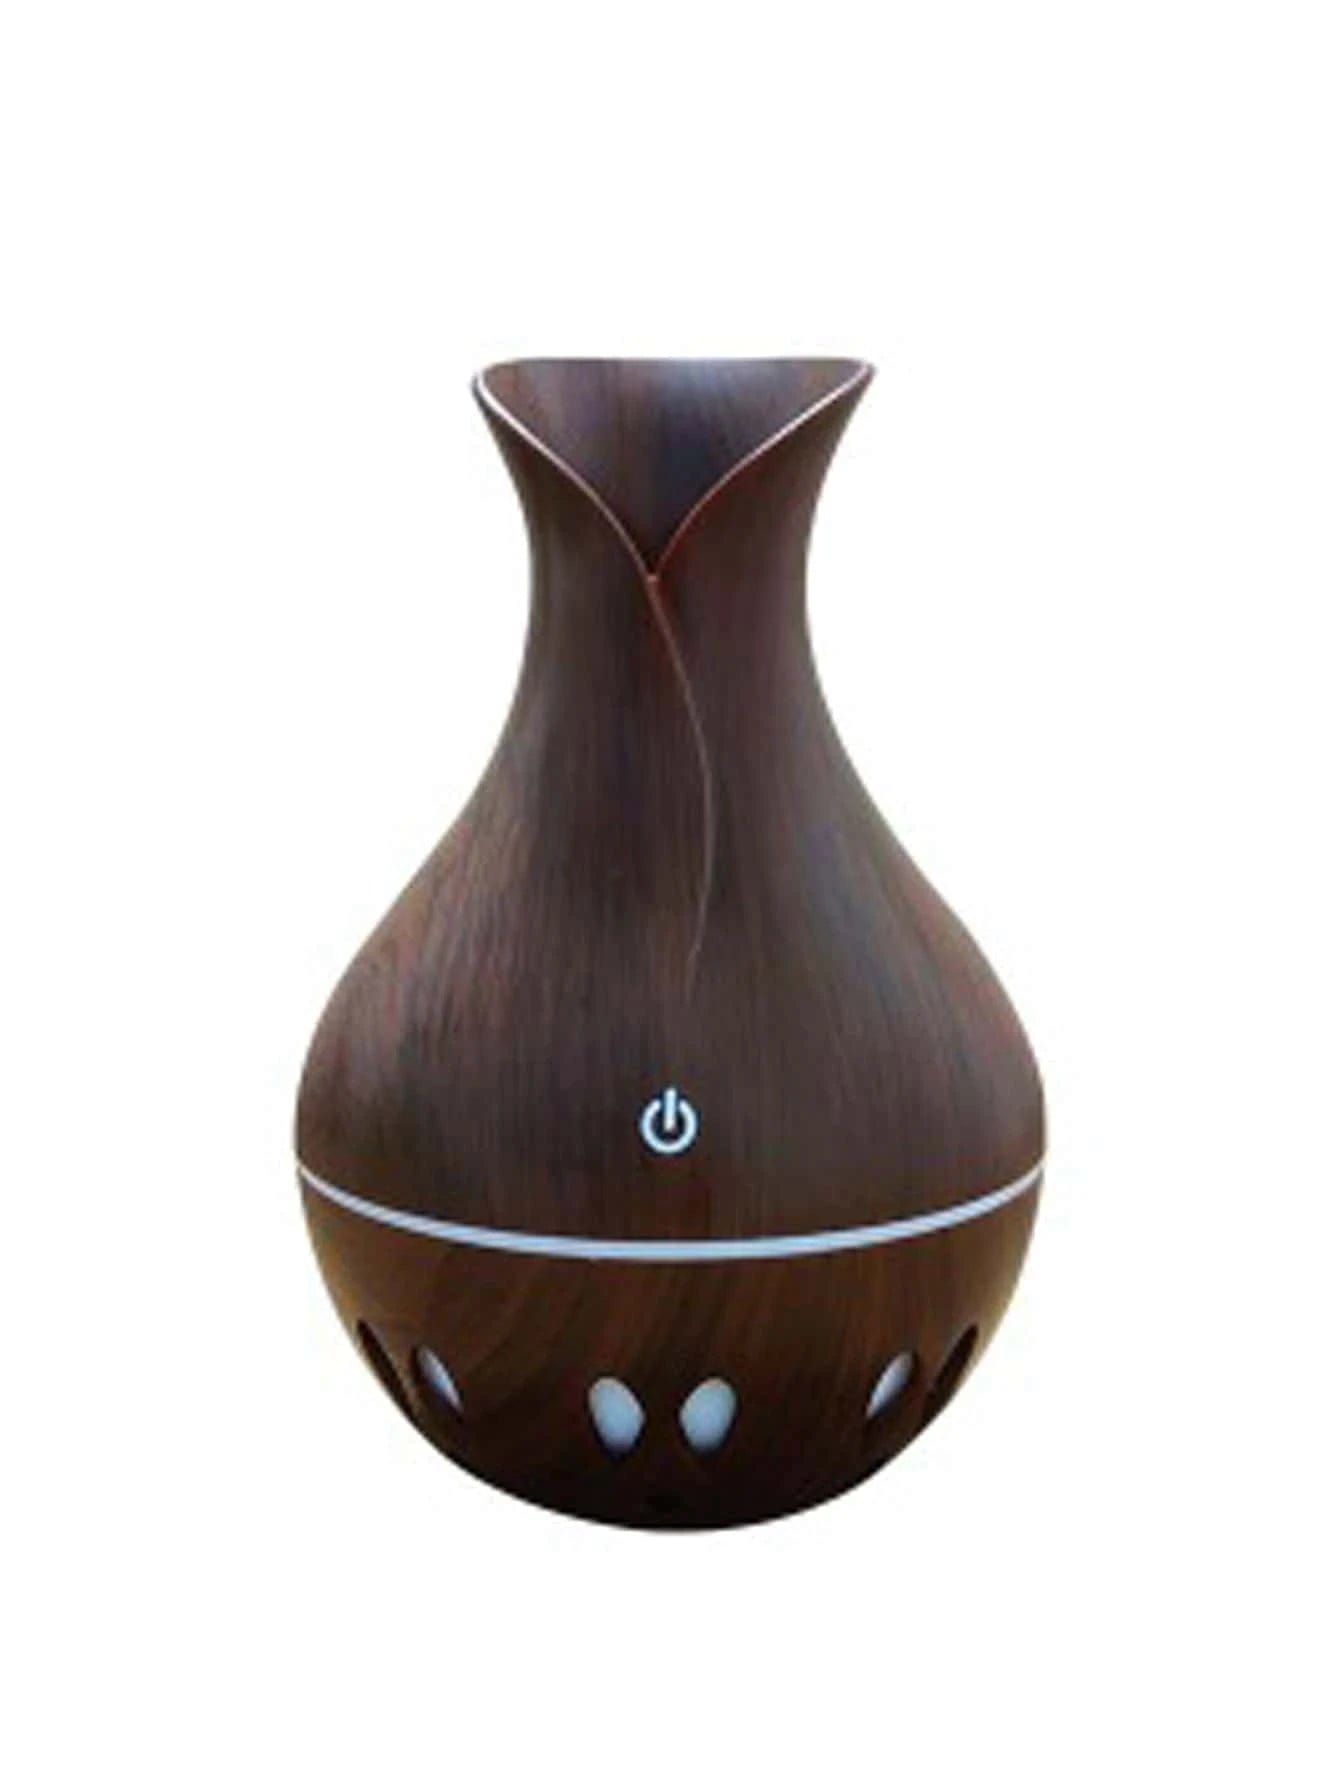 1pc Vase Design USB Wood Humidifier